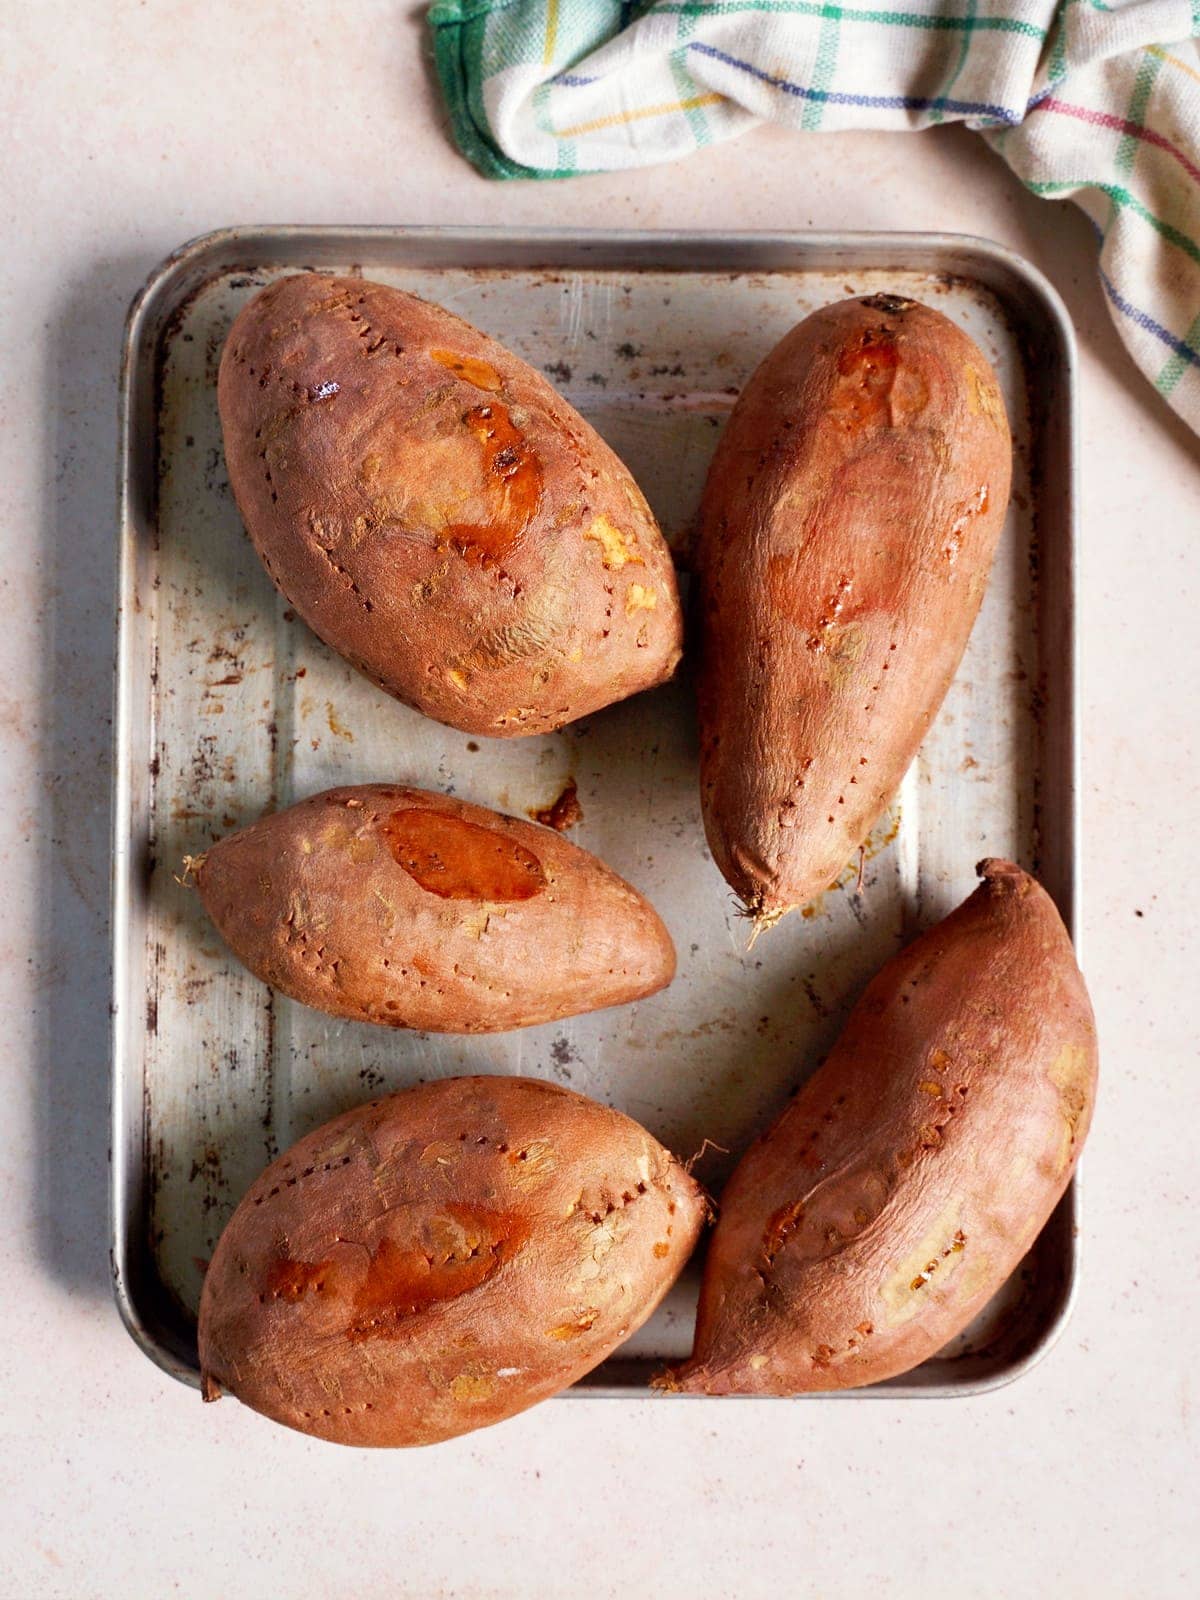 5 baked sweet potatoes on a baking sheet